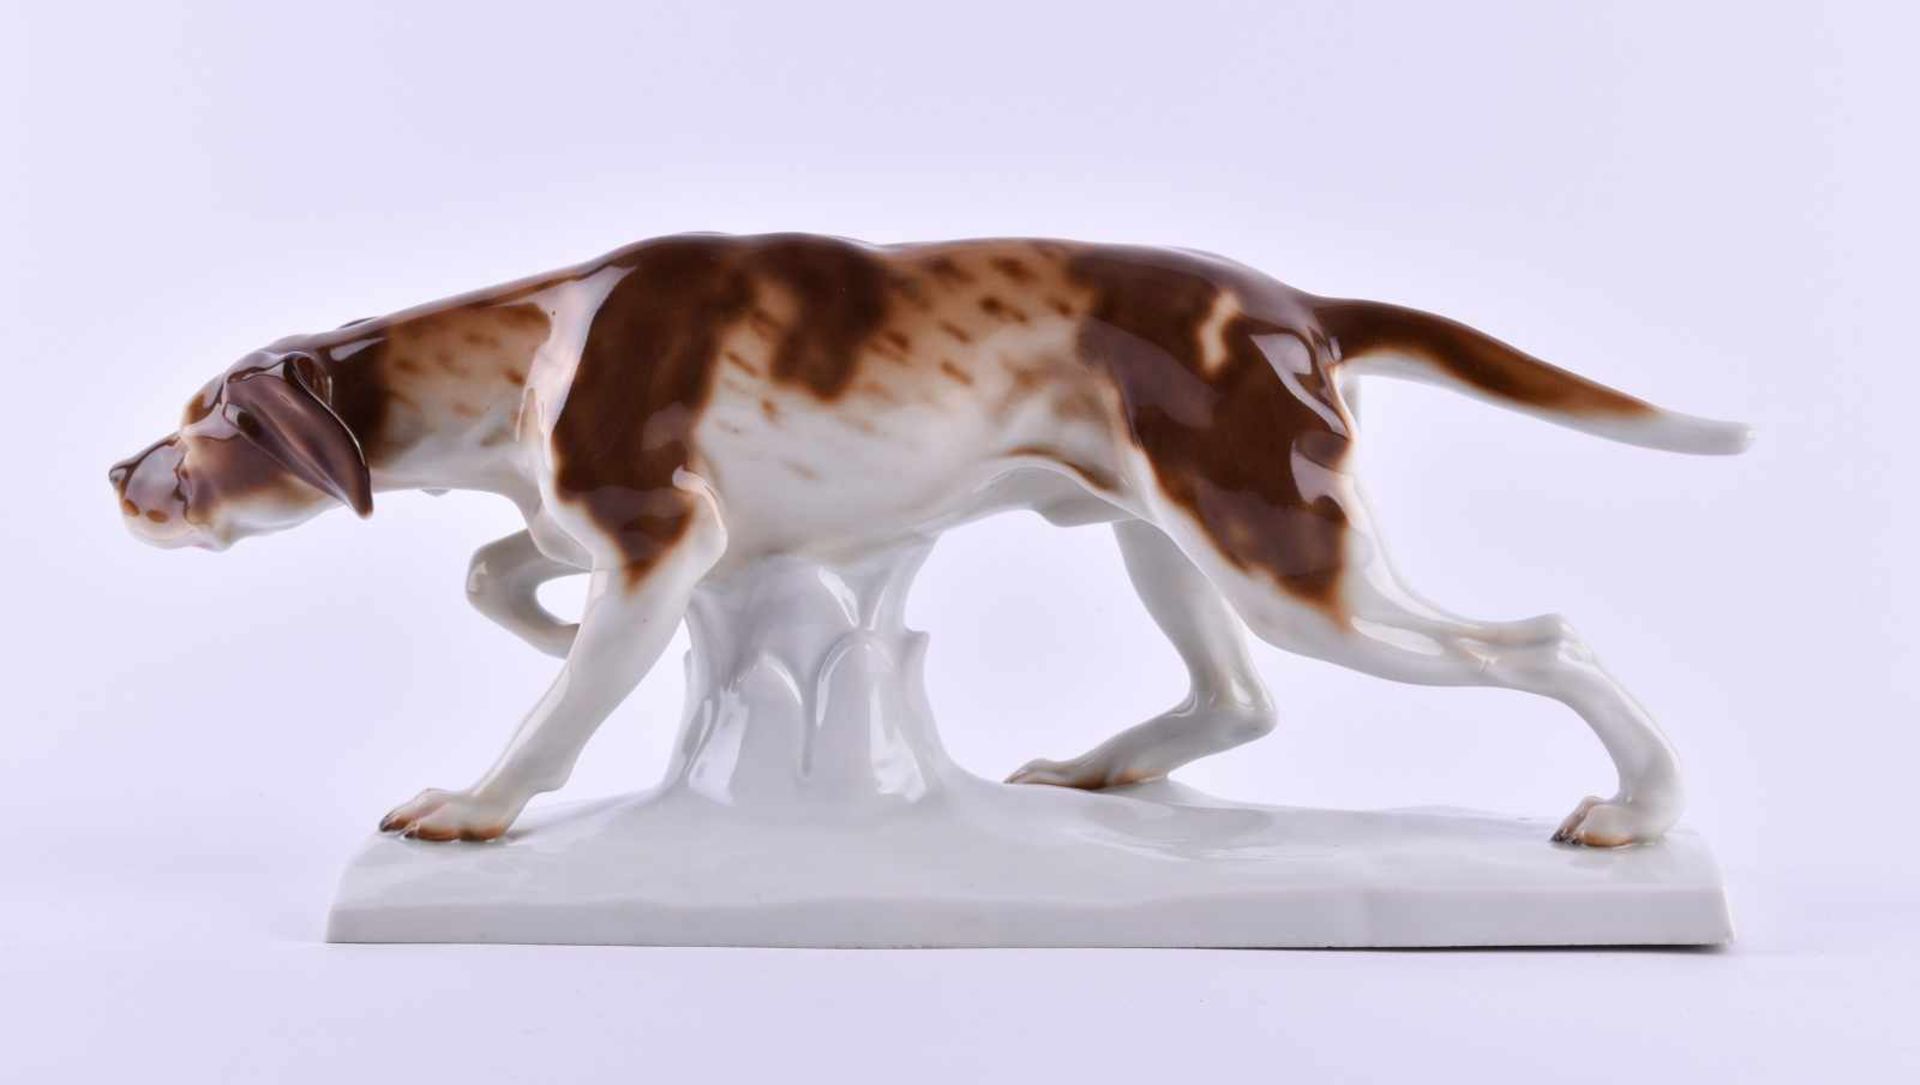 Jagdhund Goebelfarbig staffiert, gemarkt, 35 cm x 9,5 cm x 15,5 cmHunting dog Goebelcolorfully - Image 3 of 5